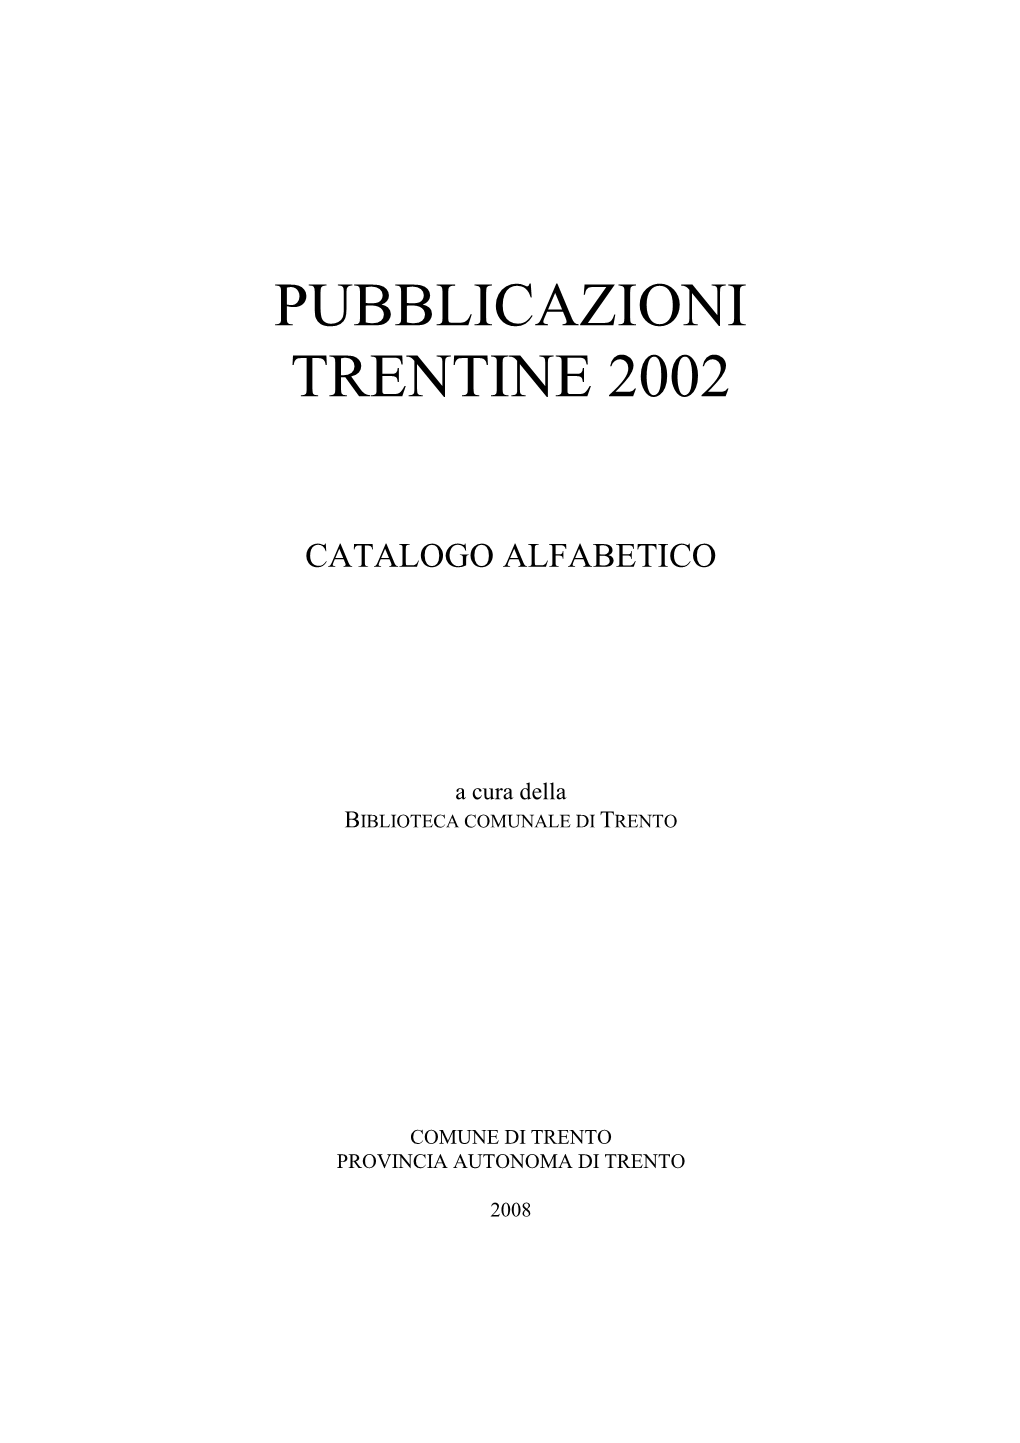 Pubblicazioni Trentine 2002